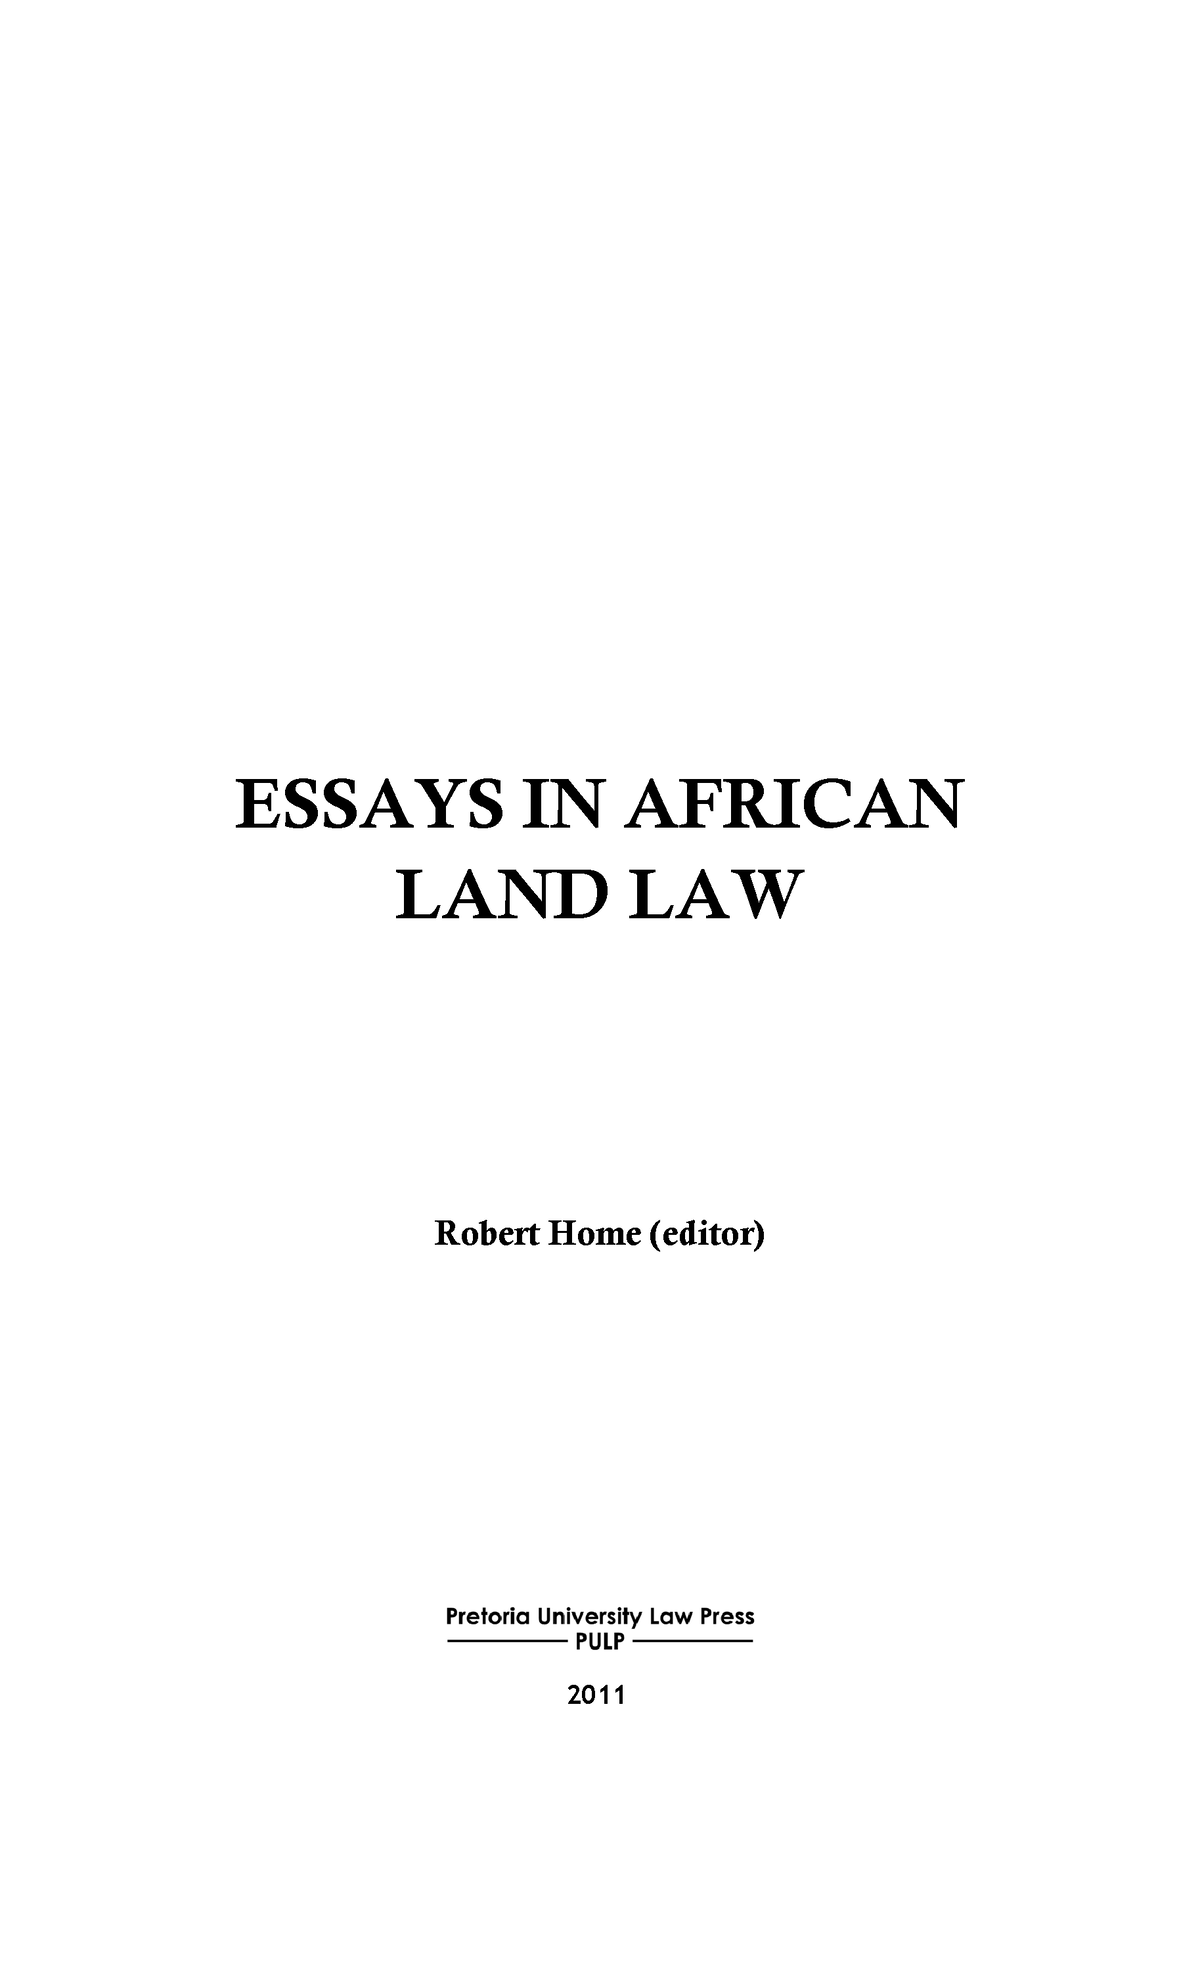 land law essays